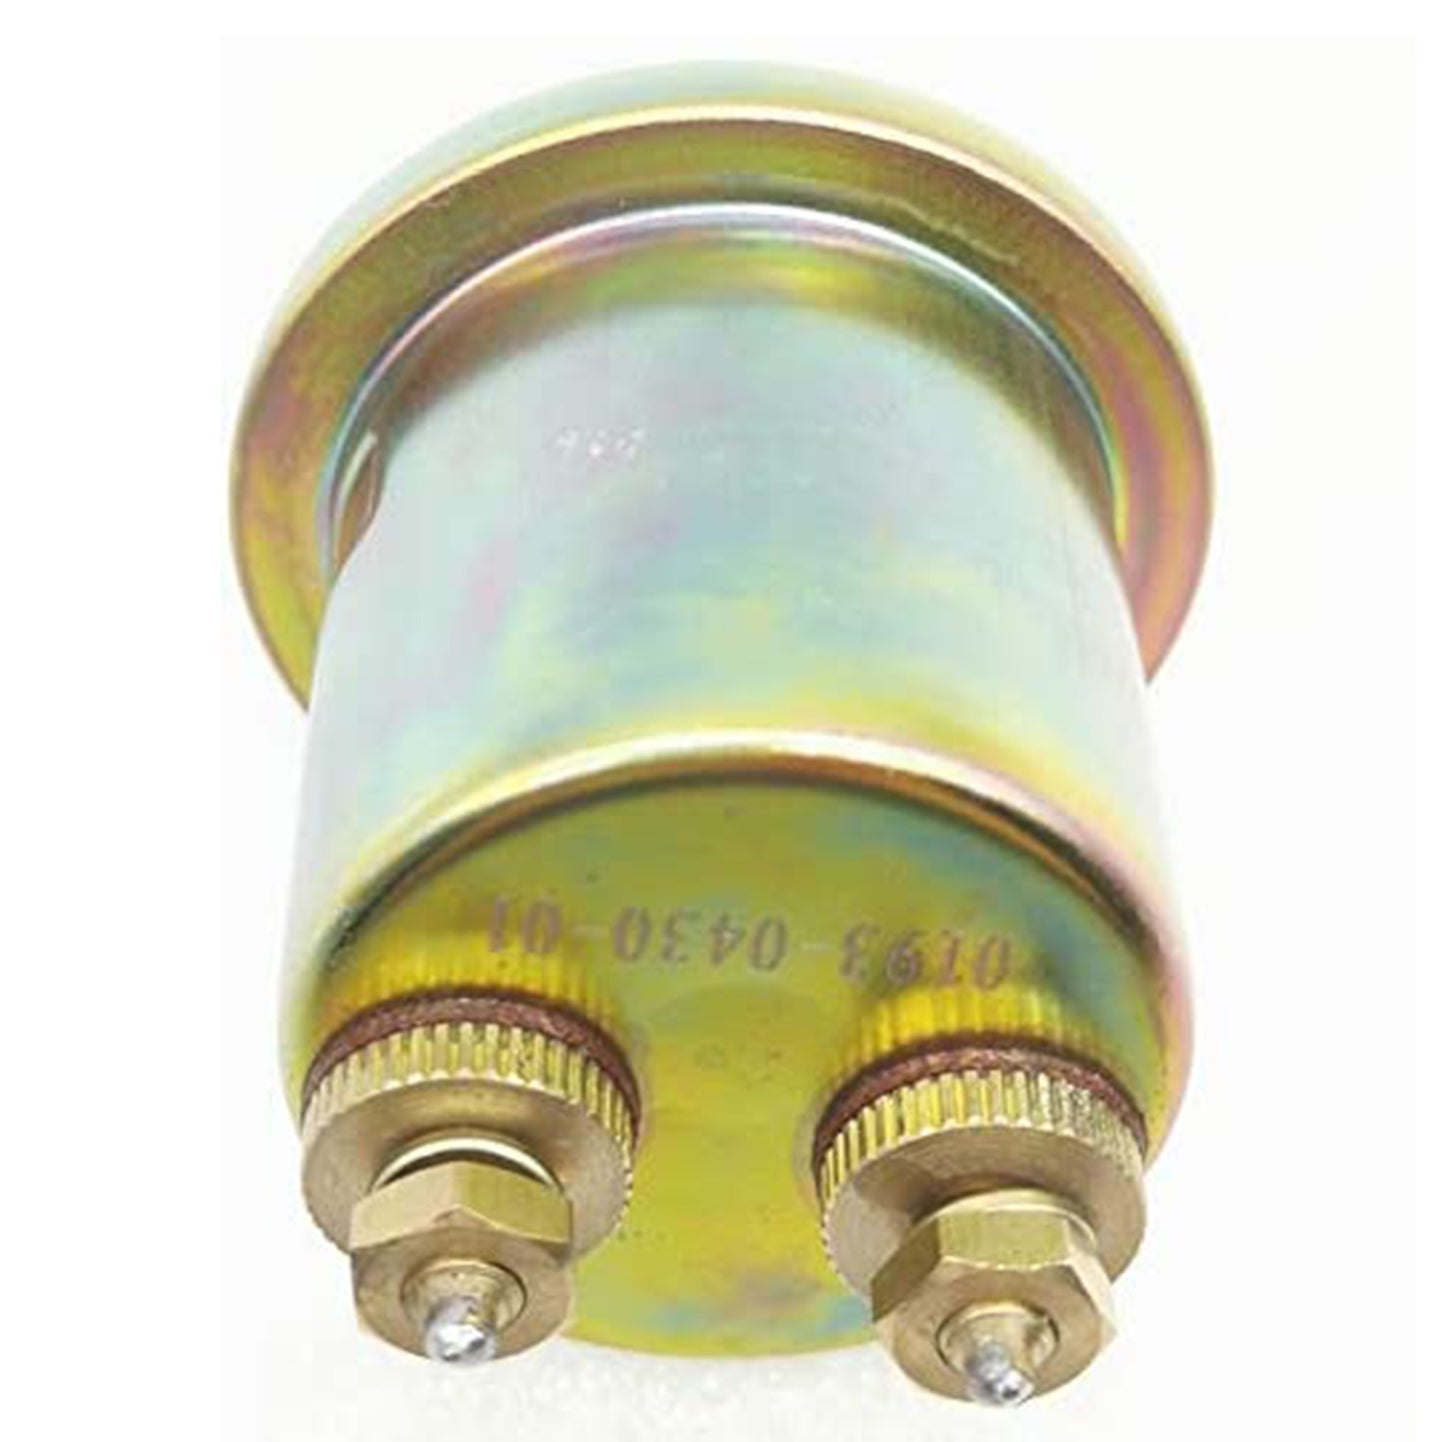 ES2P-100 Pressure Sender Compatible with Murphy 05-70-1858 Cummins Onan 0193-0430-01